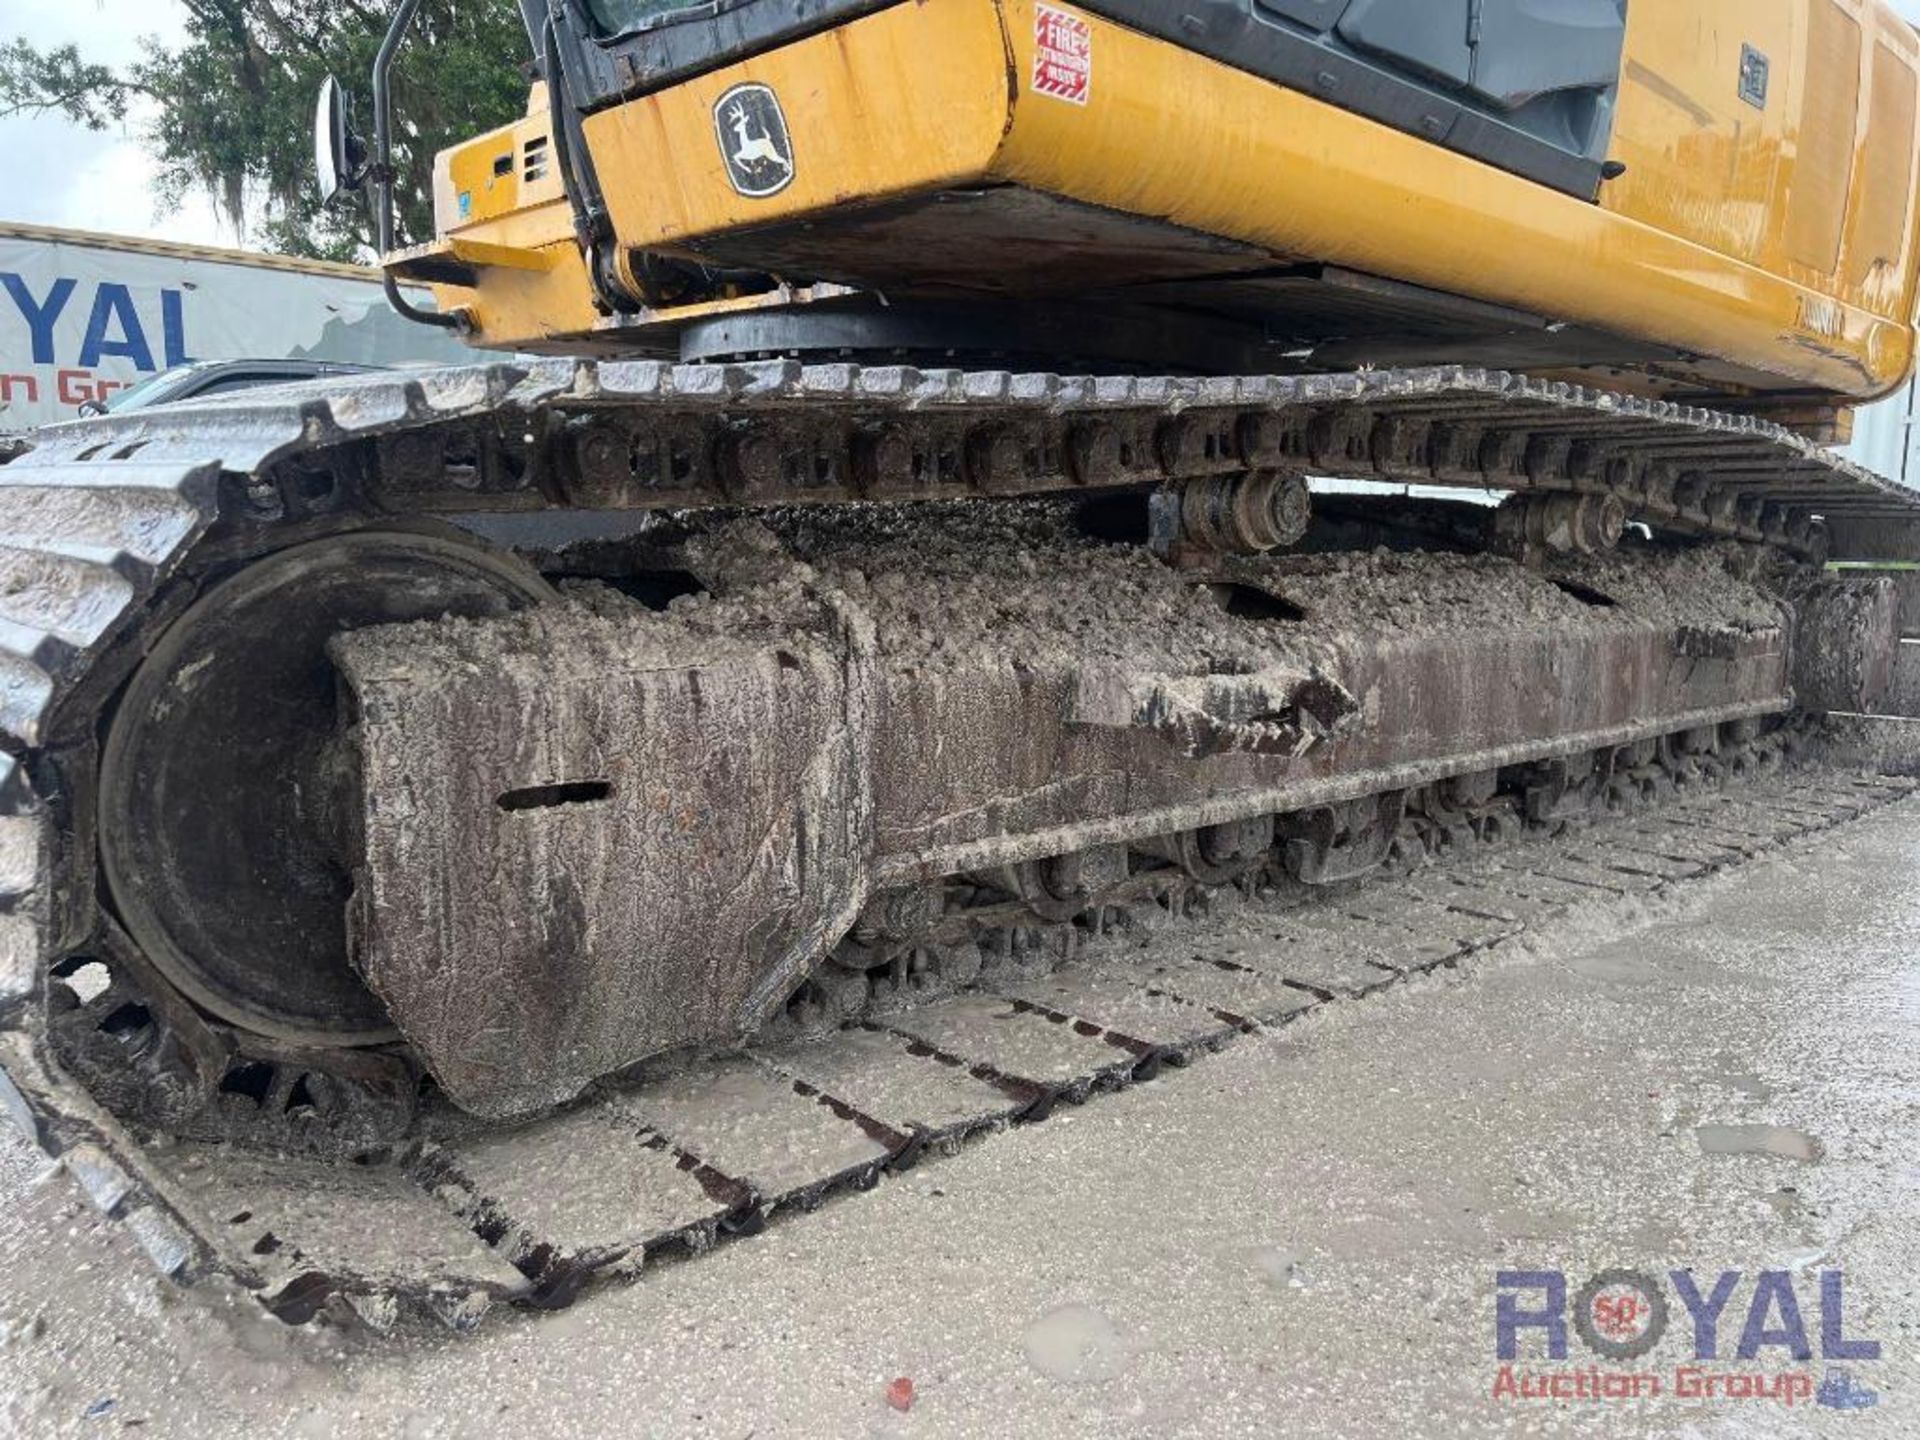 2015 John Deere 250G Hydraulic Long Reach Excavator - Image 23 of 43